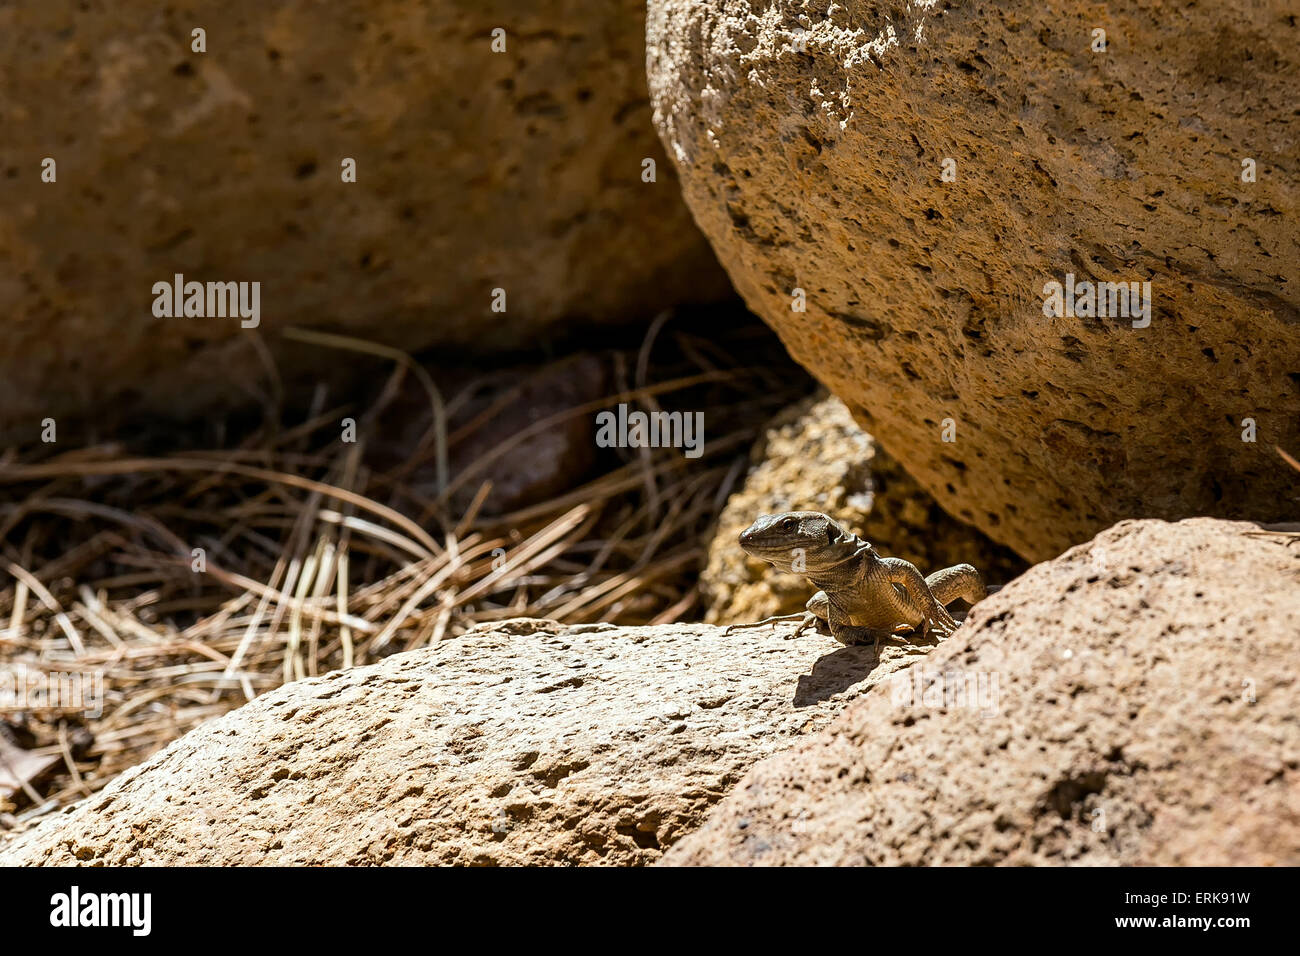 Lizard or lacertian reptile sitting on stone Stock Photo